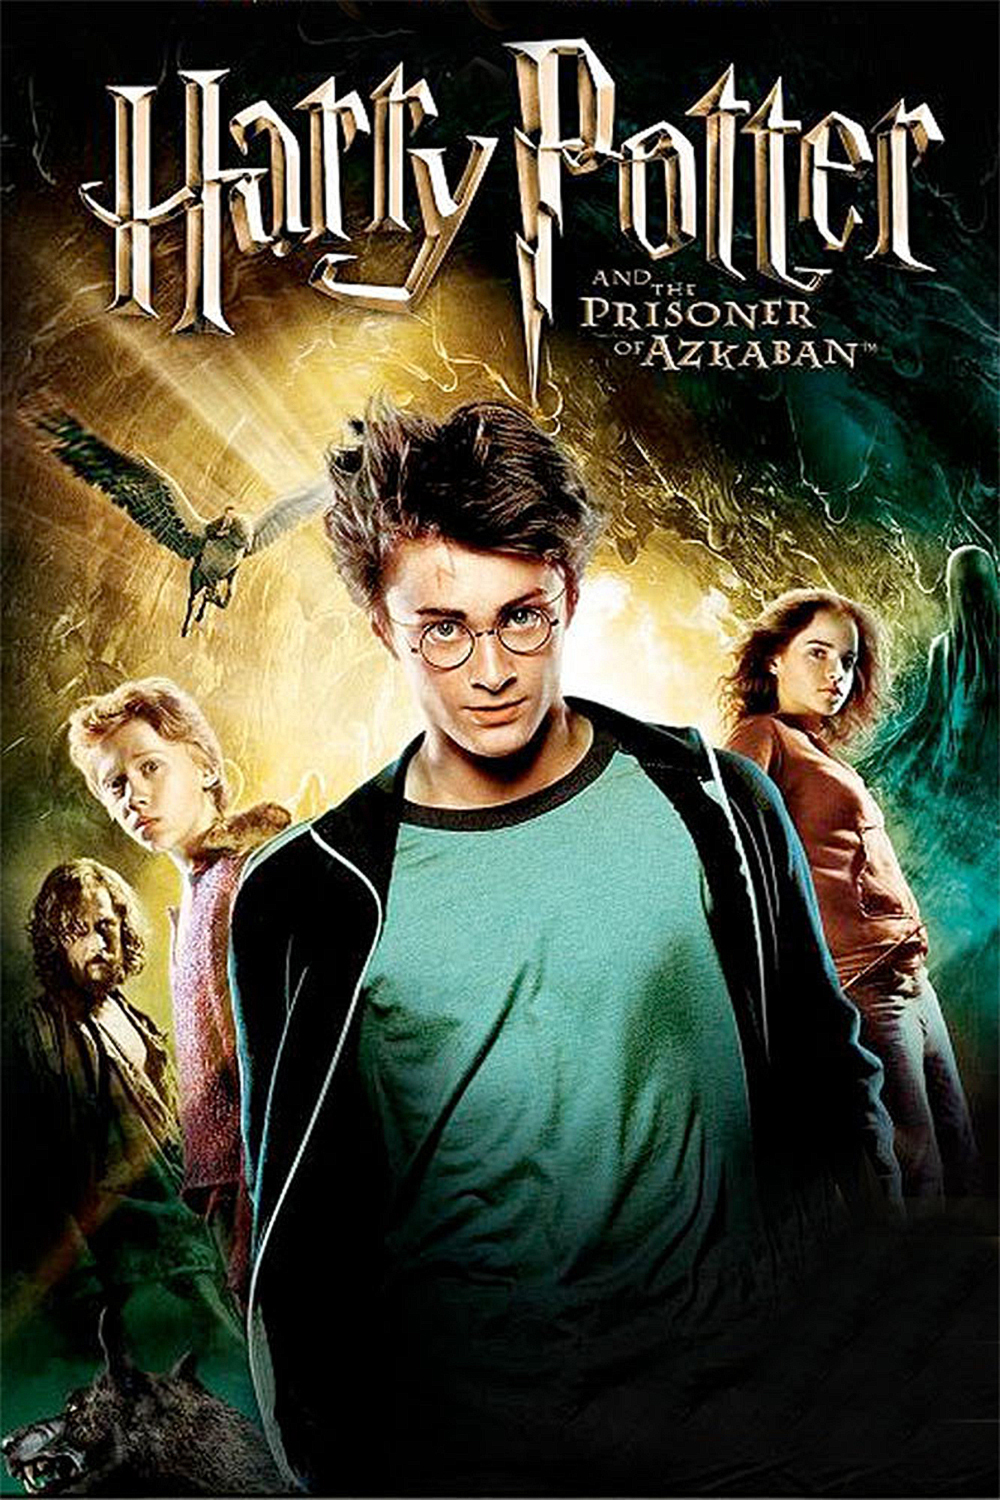 Harry Potter And The Prisoner Of Azkaban Backgrounds on Wallpapers Vista